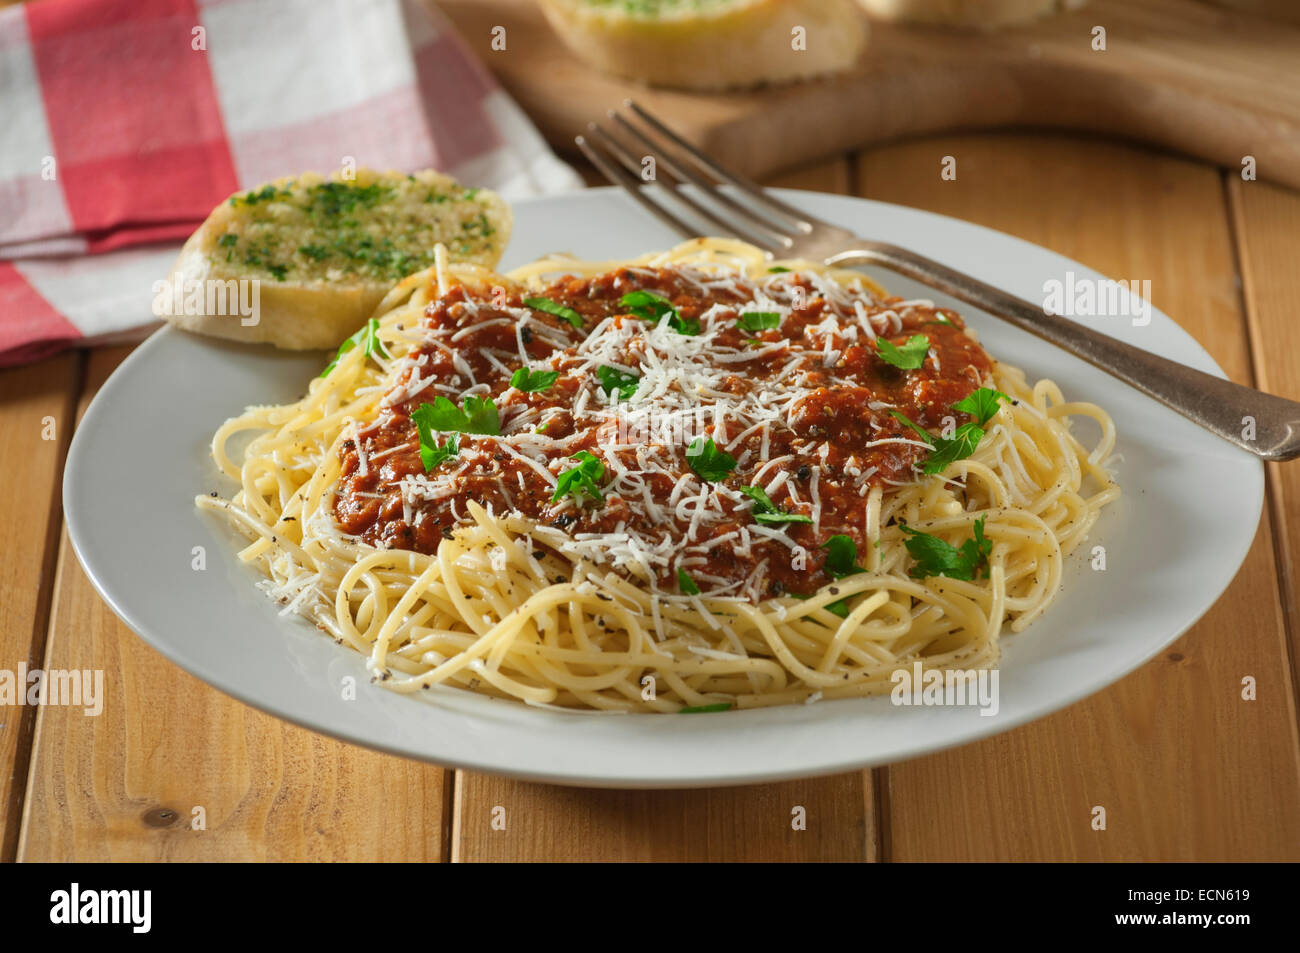 Los espaguetis a la boloñesa con pan de ajo. Plato de pasta italiana. Foto de stock